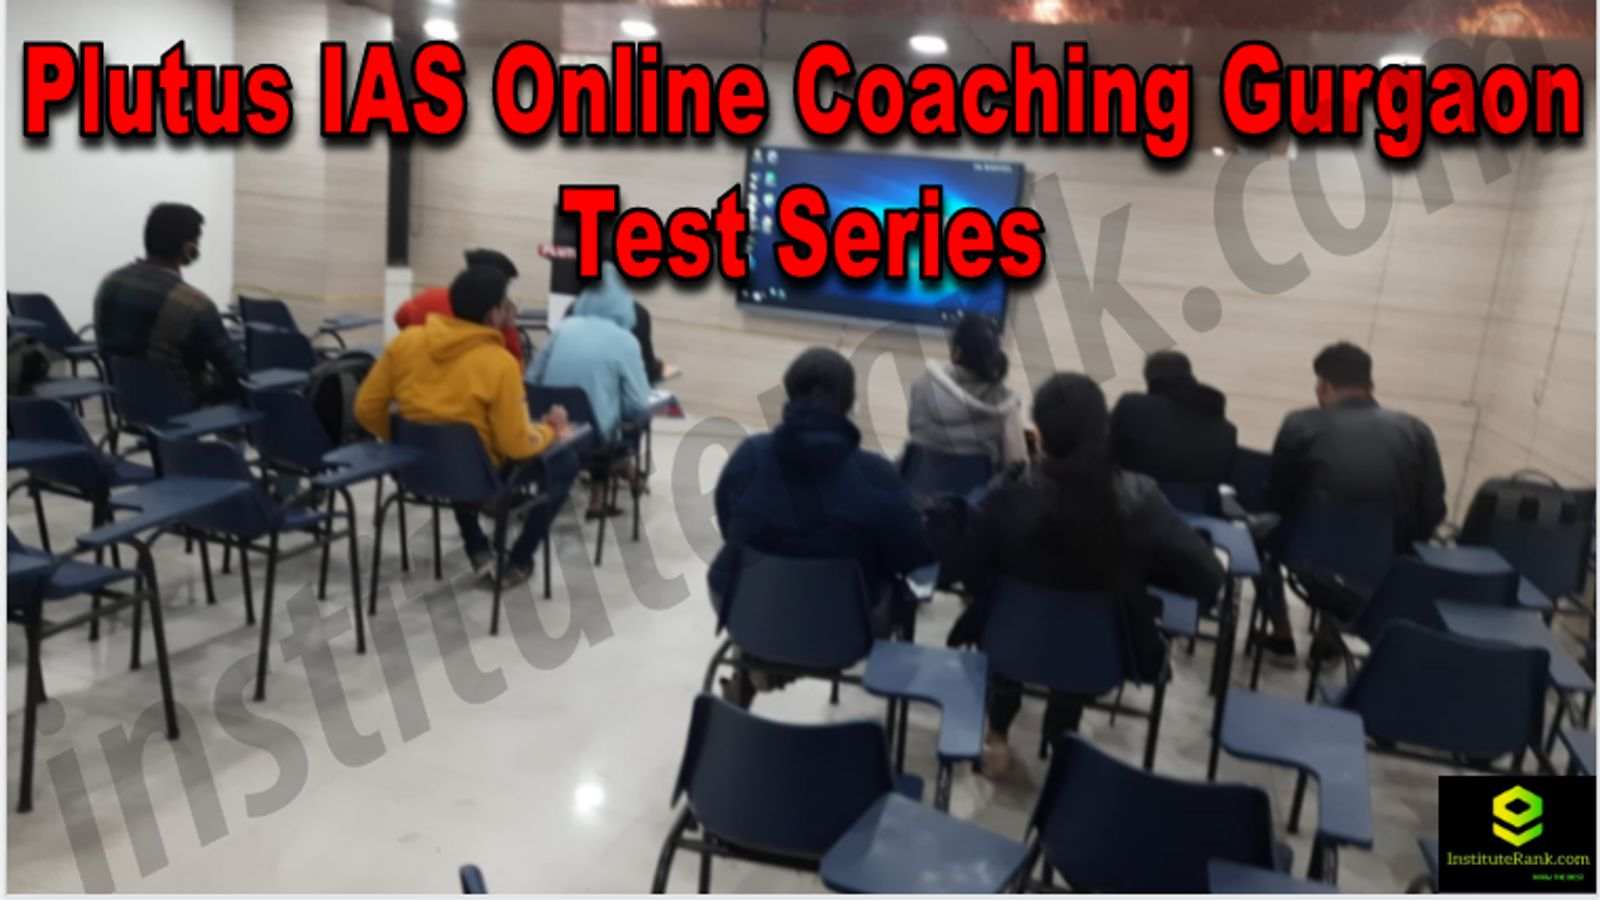 Plutus IAS Online Coaching Gurgaon Reviews Test Series